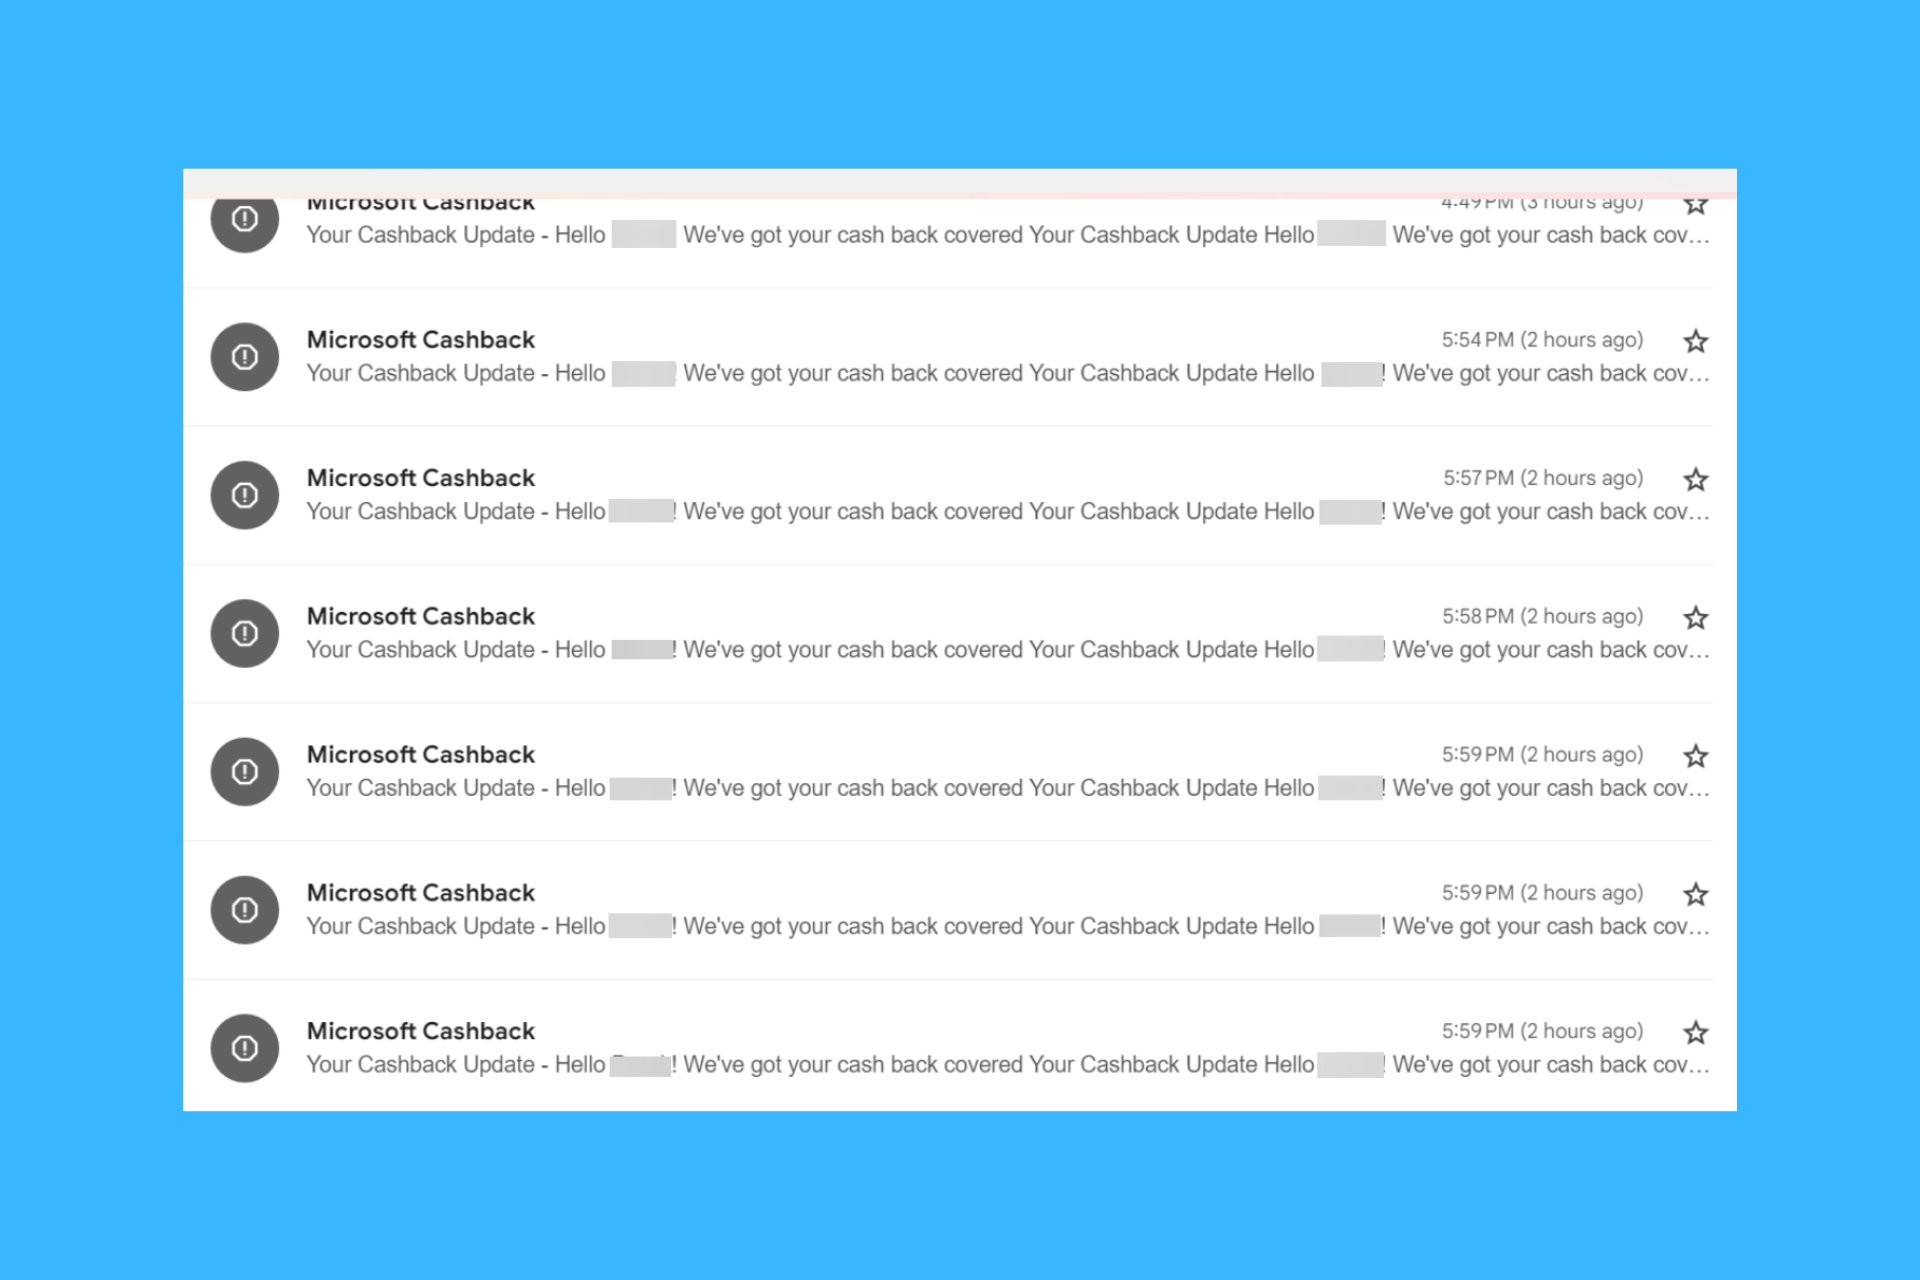 Microsoft Cashback spam emails